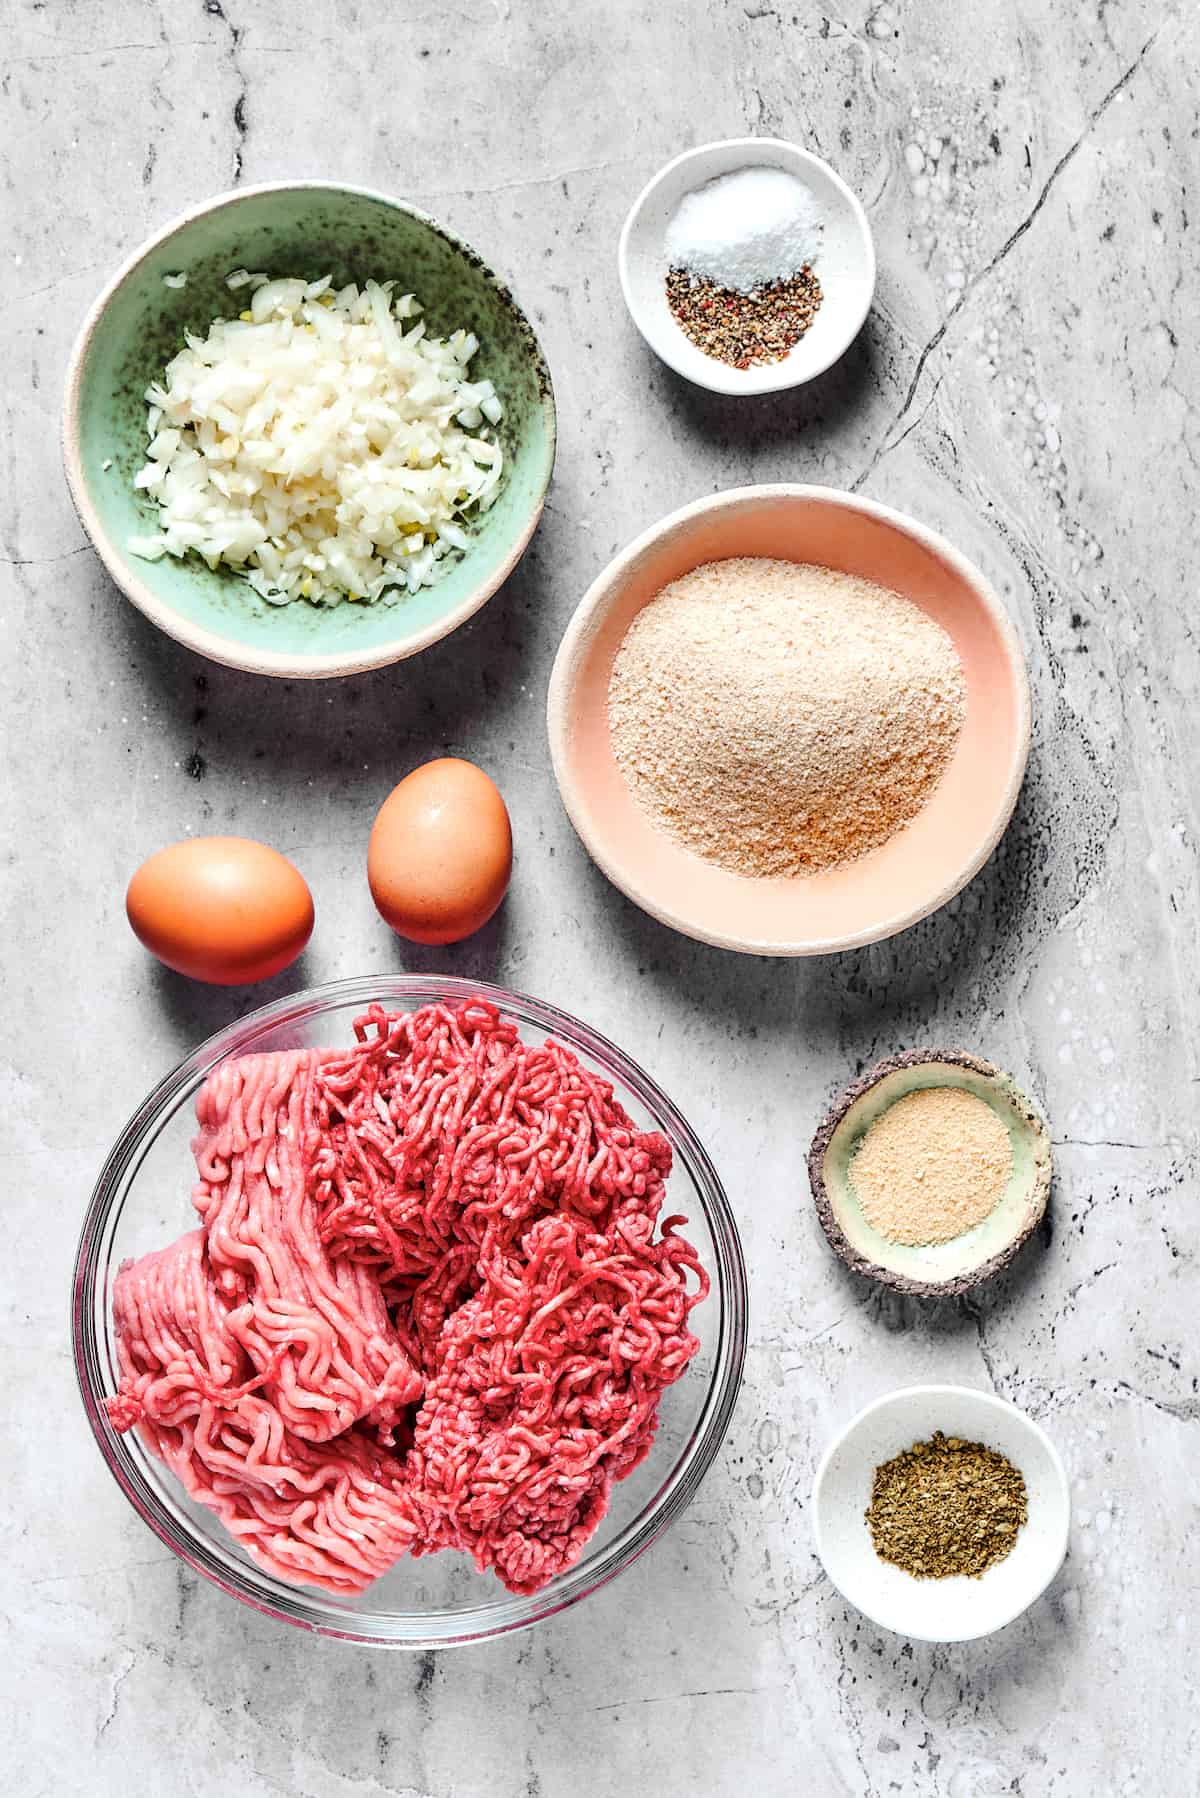 From top left: Onion, salt and pepper, eggs, breadcrumbs, ground beef and ground turkey, garlic powder, Italian seasoning.